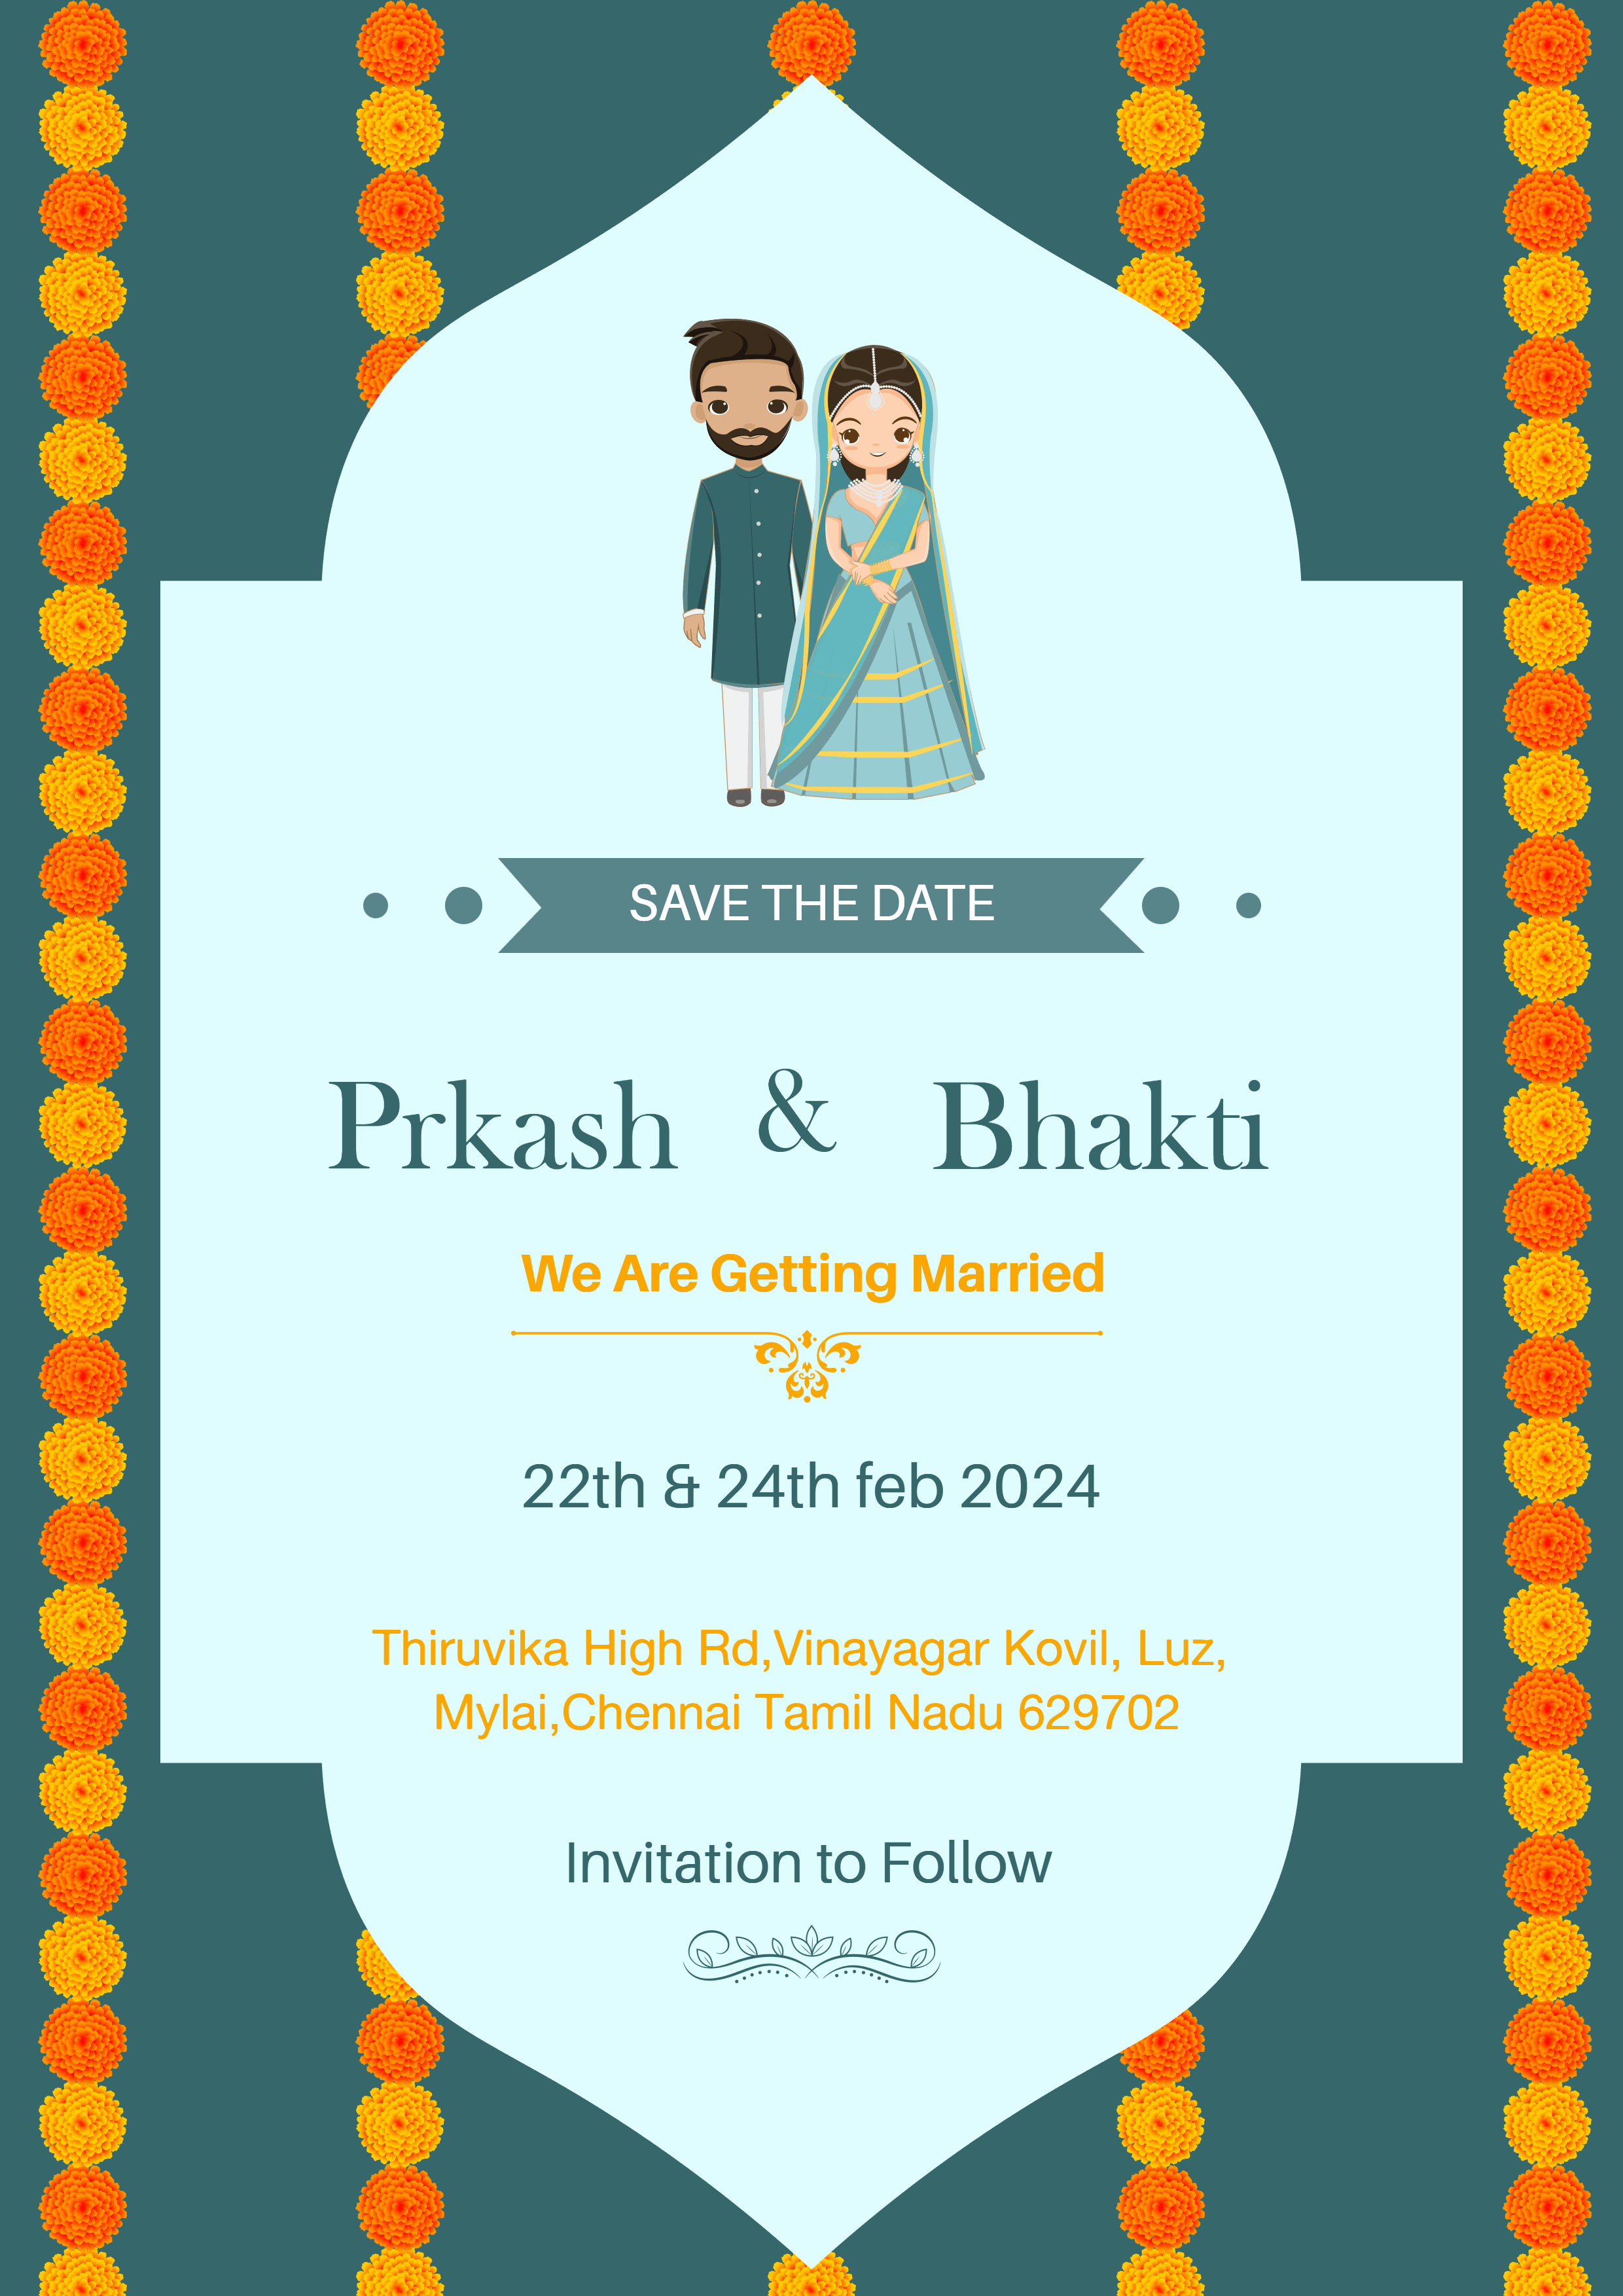 Digital Wedding Save The Date Invitation Card